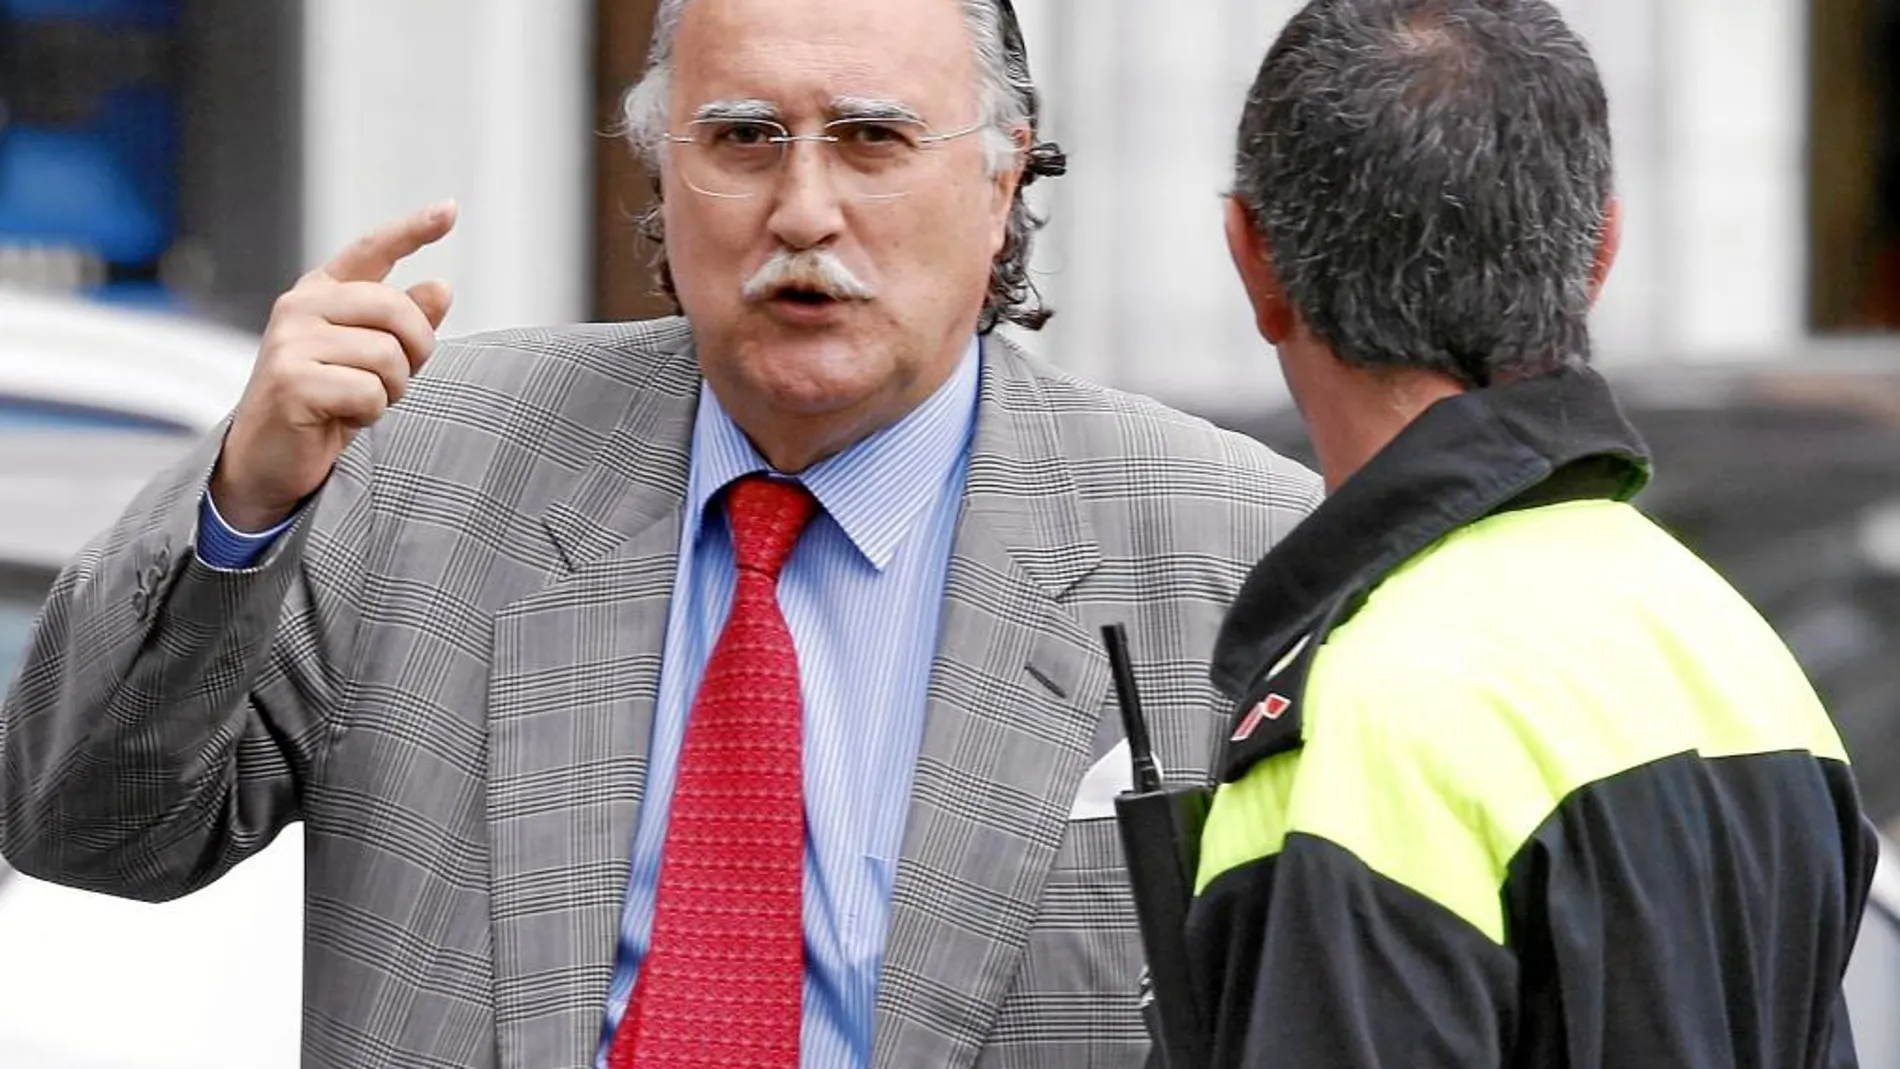 El alcalde de Bilbao, Iñaki Azkuna, no ve motivos para sustituir a Jone Artola